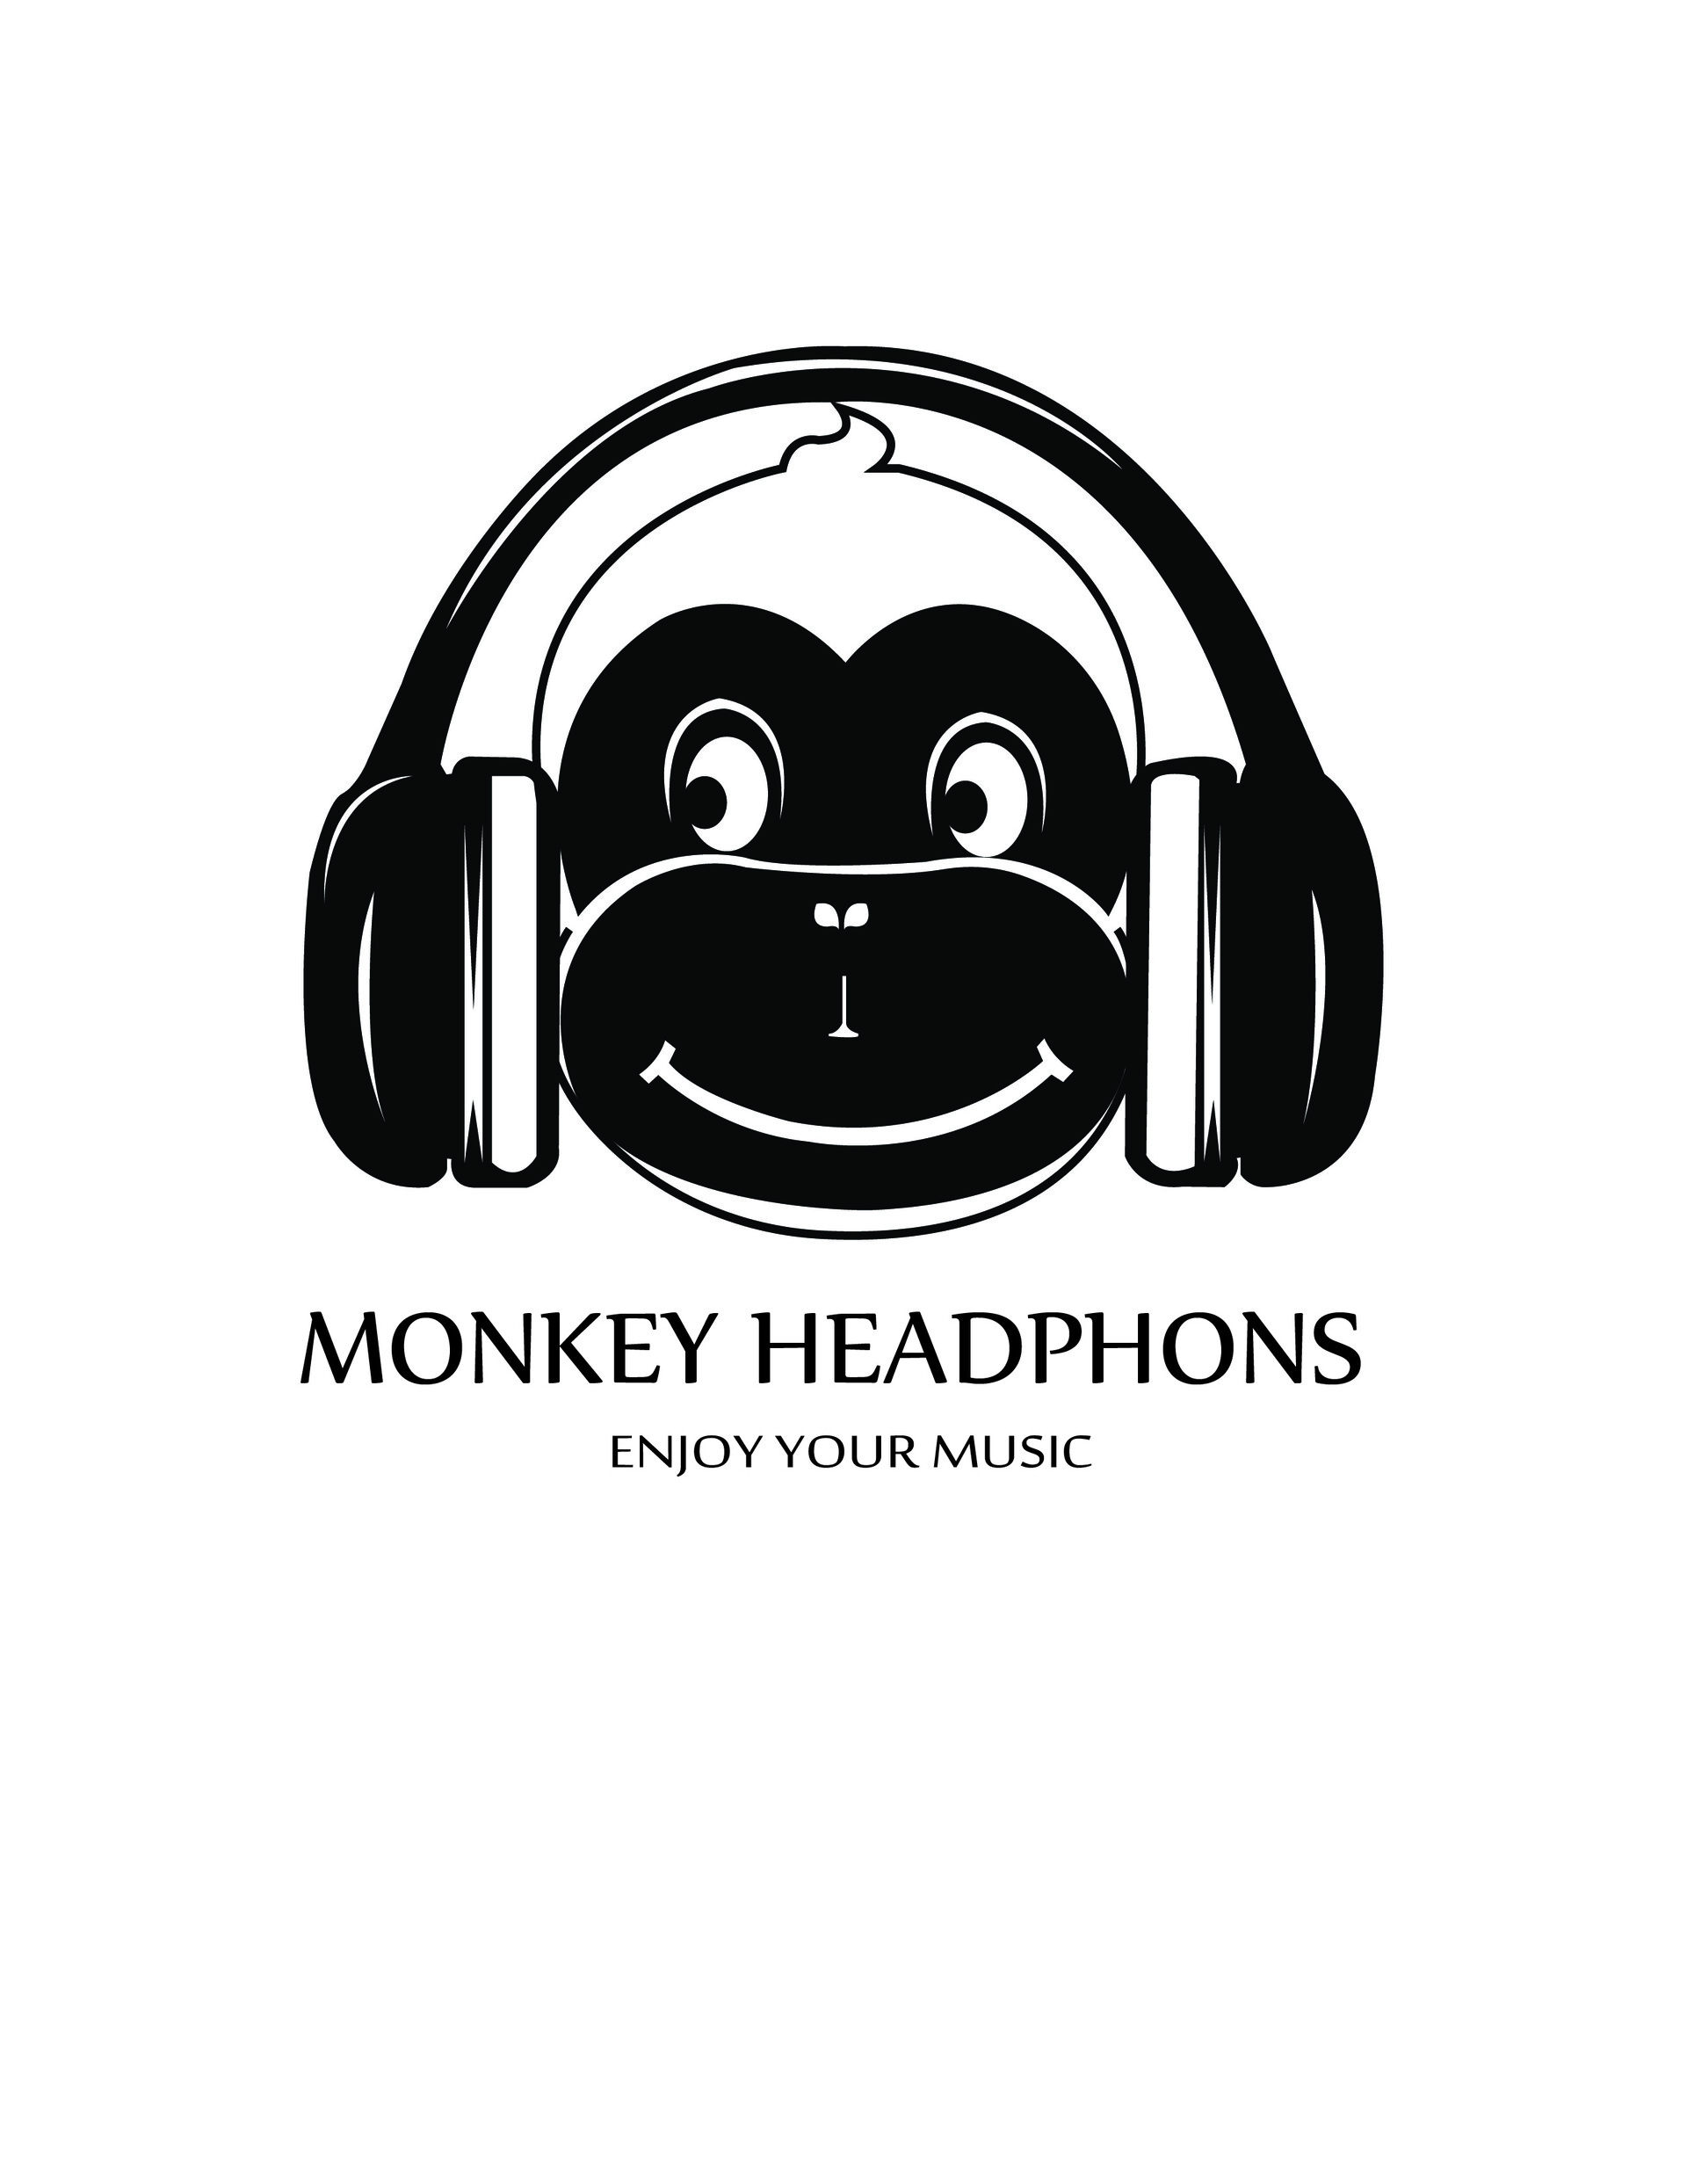 ArtStation - Headphones logo